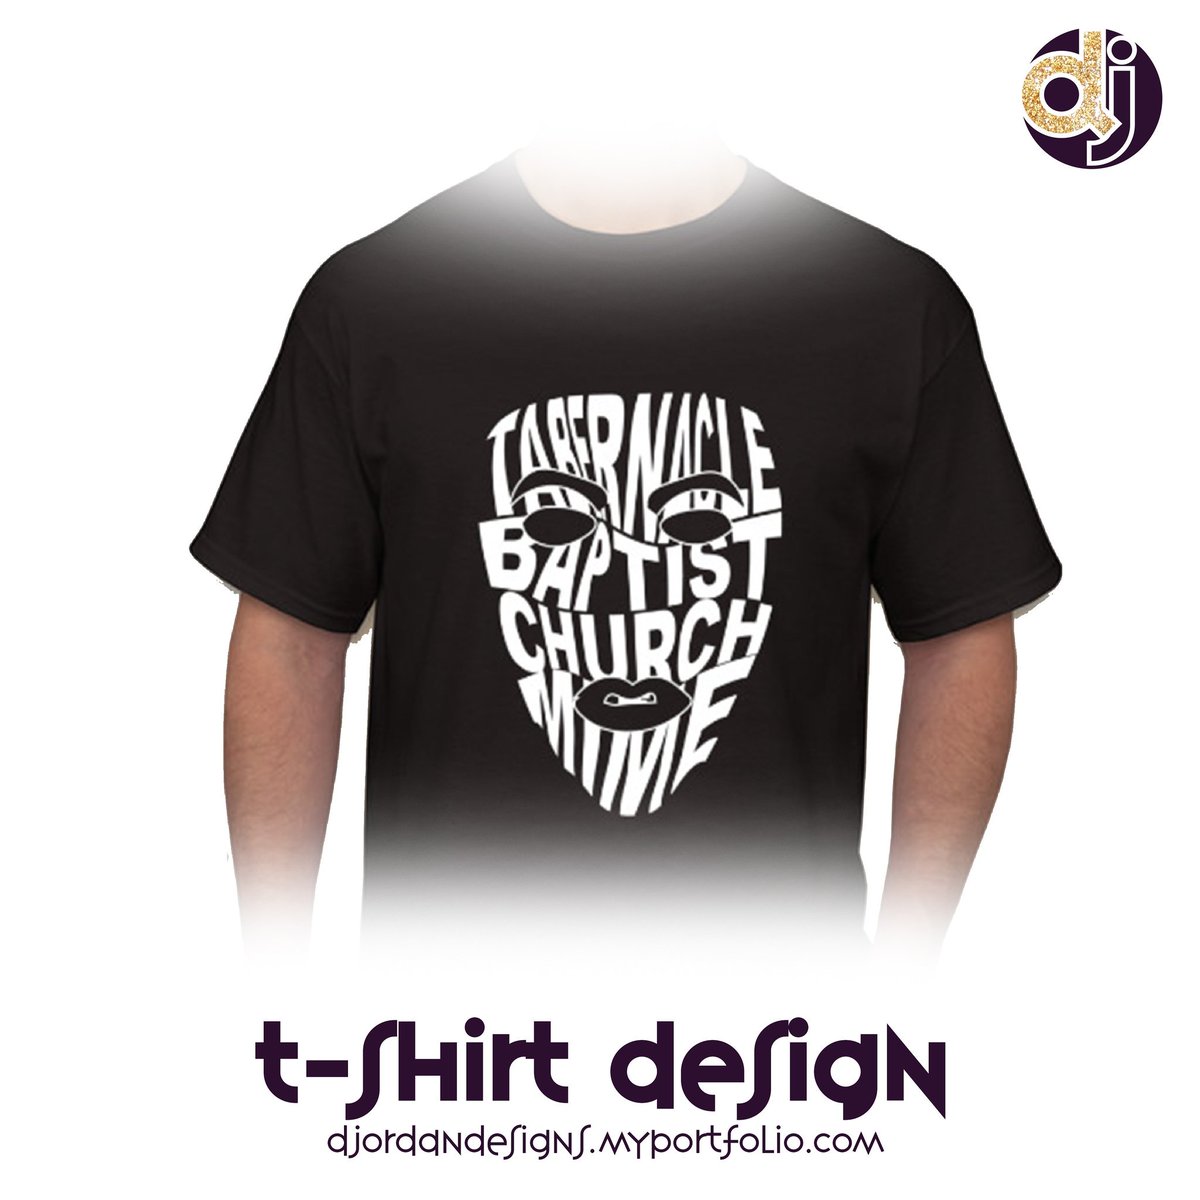 T-shirt Design✨ #logos #businesscards #tshirtdesigns #djordandesigns #flyers #blackbusiness #marketing  #757braids #graphicdesigners #womanowned #vuu #vcu #vsu #ncat #blackgirlsmagic #odu #nsu #rva